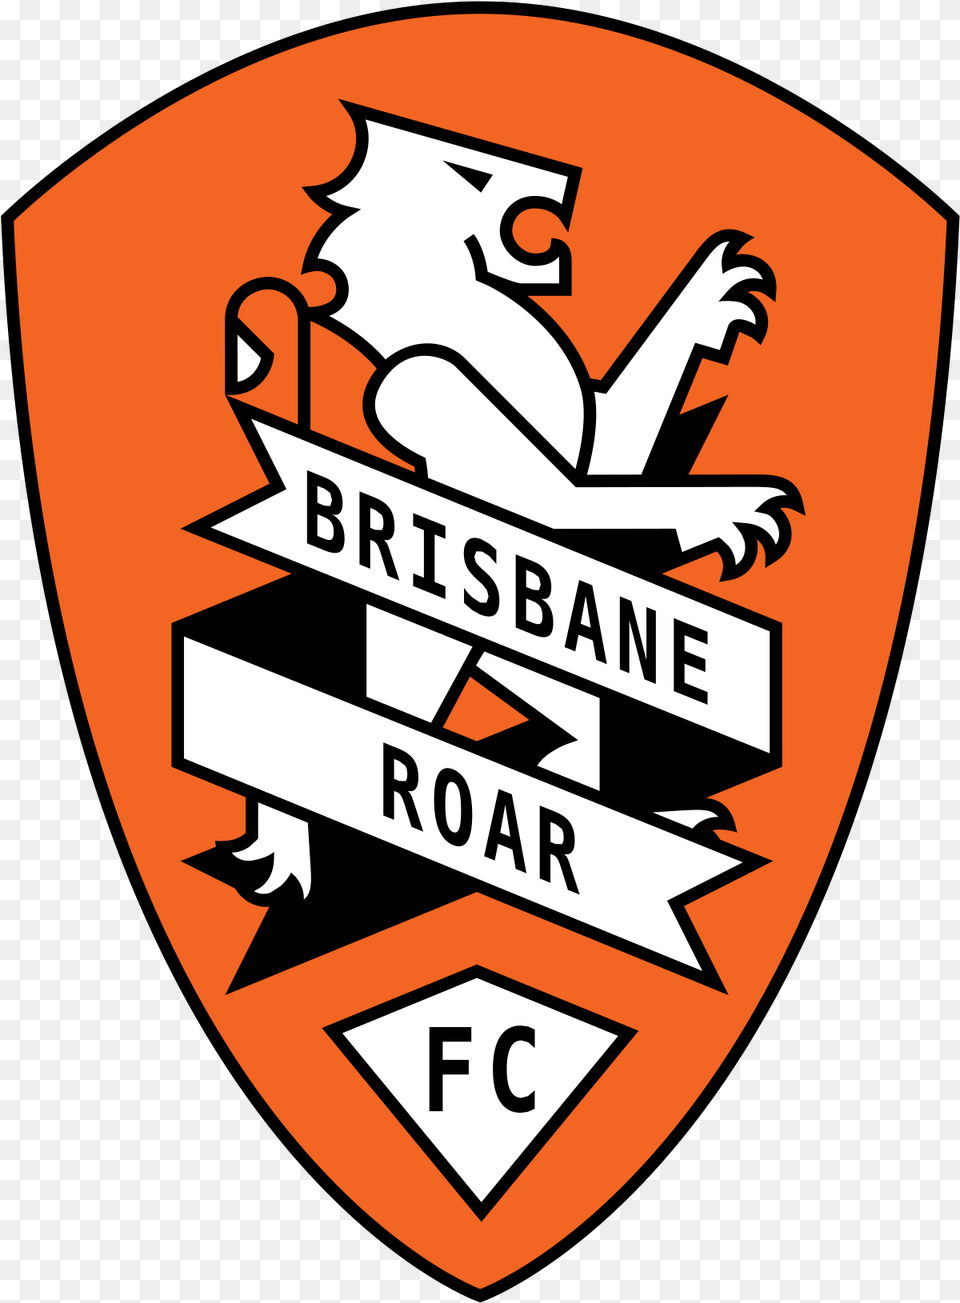 Brisbane Roar Fc Wikipedia Brisbane Roar Fc, Badge, Logo, Symbol, Dynamite Png